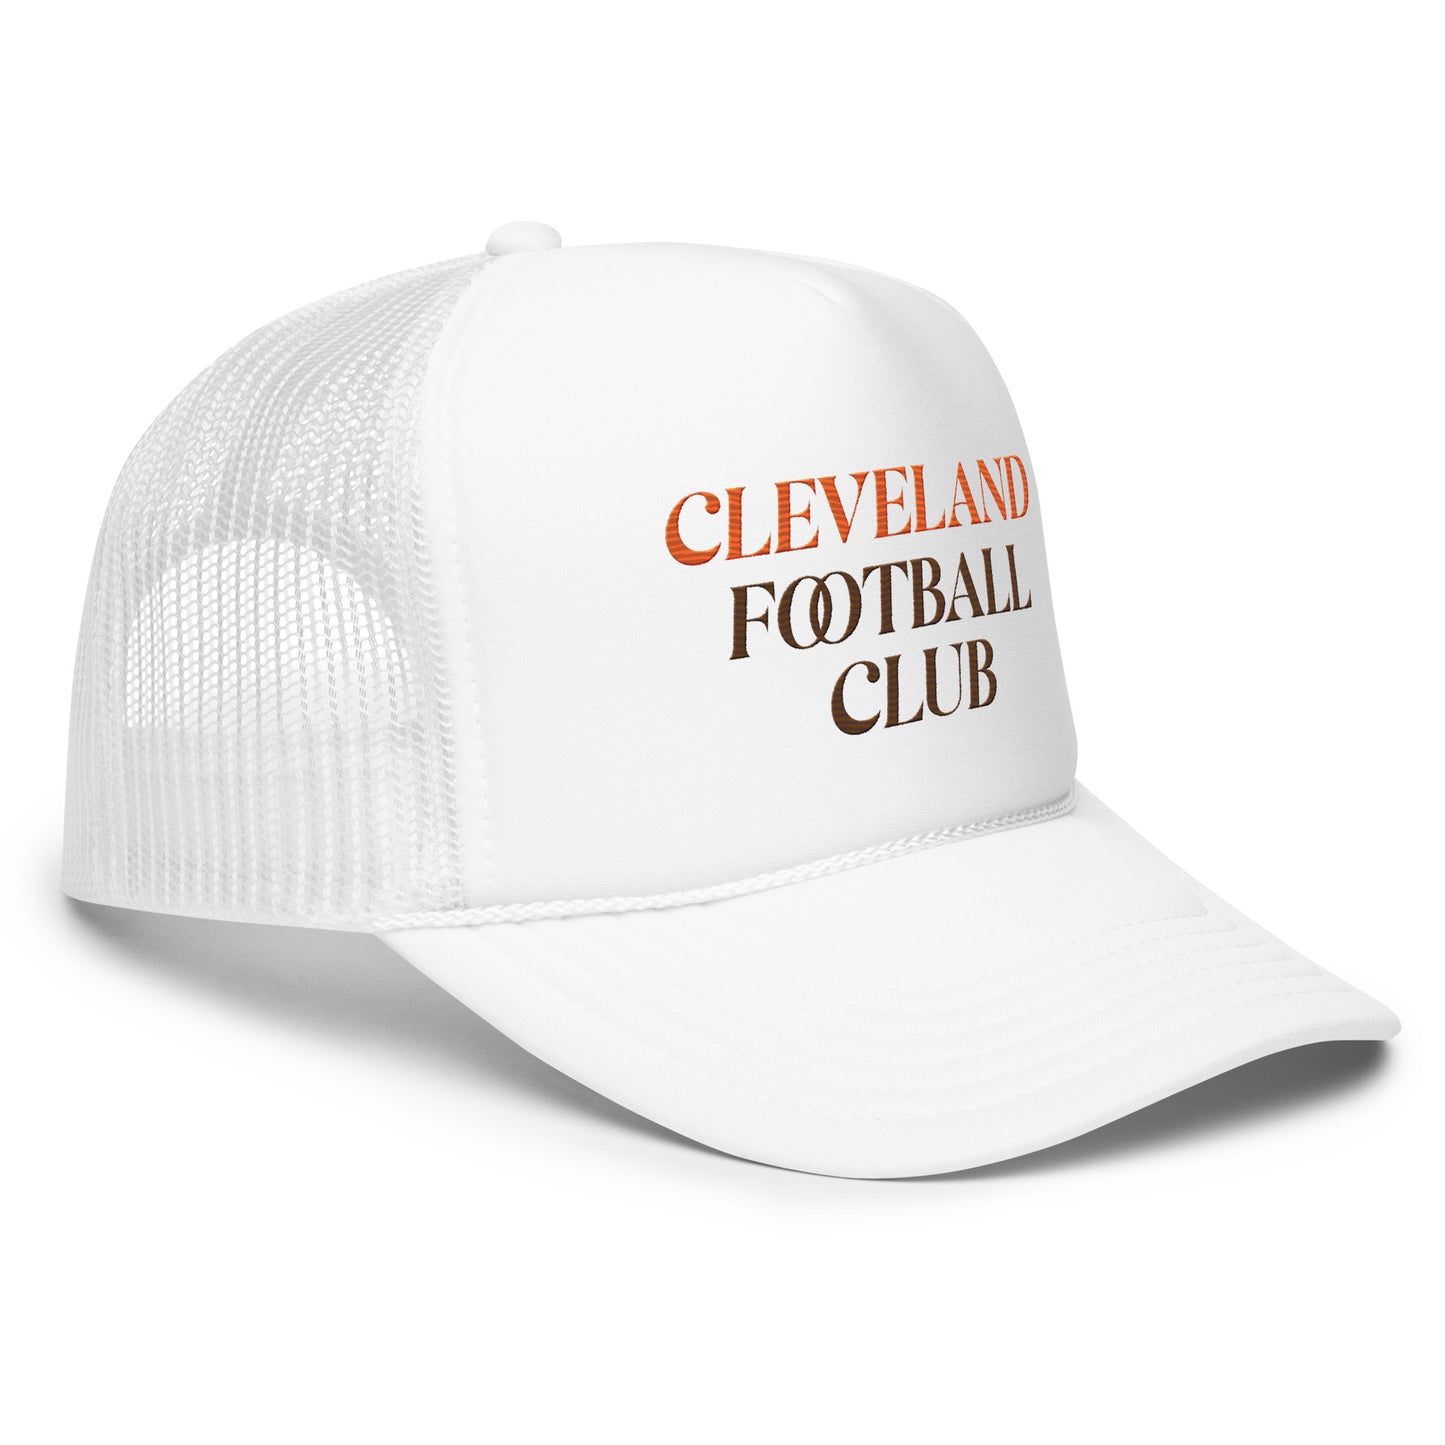 Cleveland Football Club Foam trucker hat